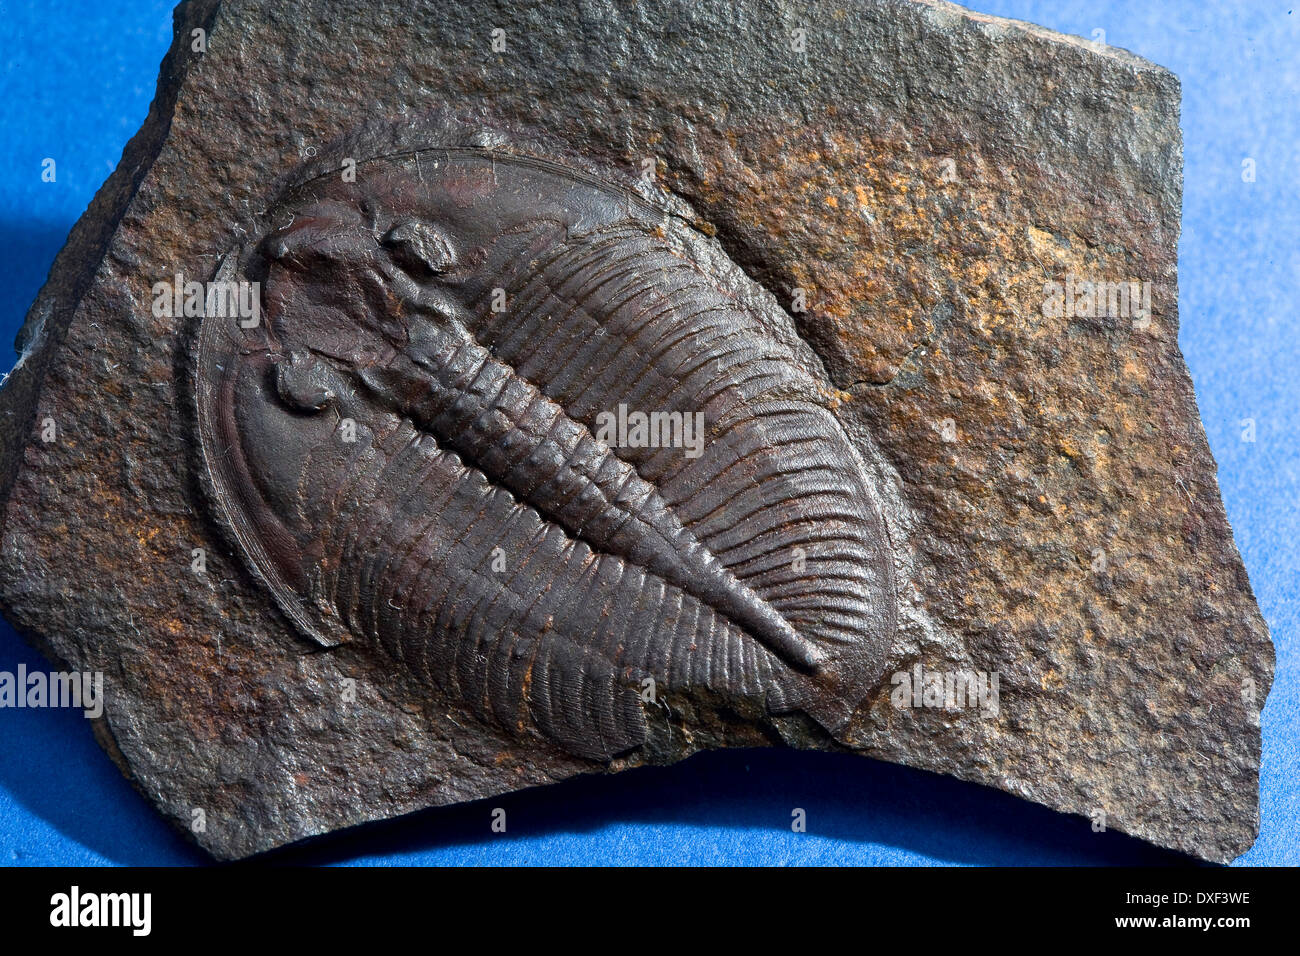 Specimen of fossil trilobite from ordovician rocks in shropshire.england. Stock Photo